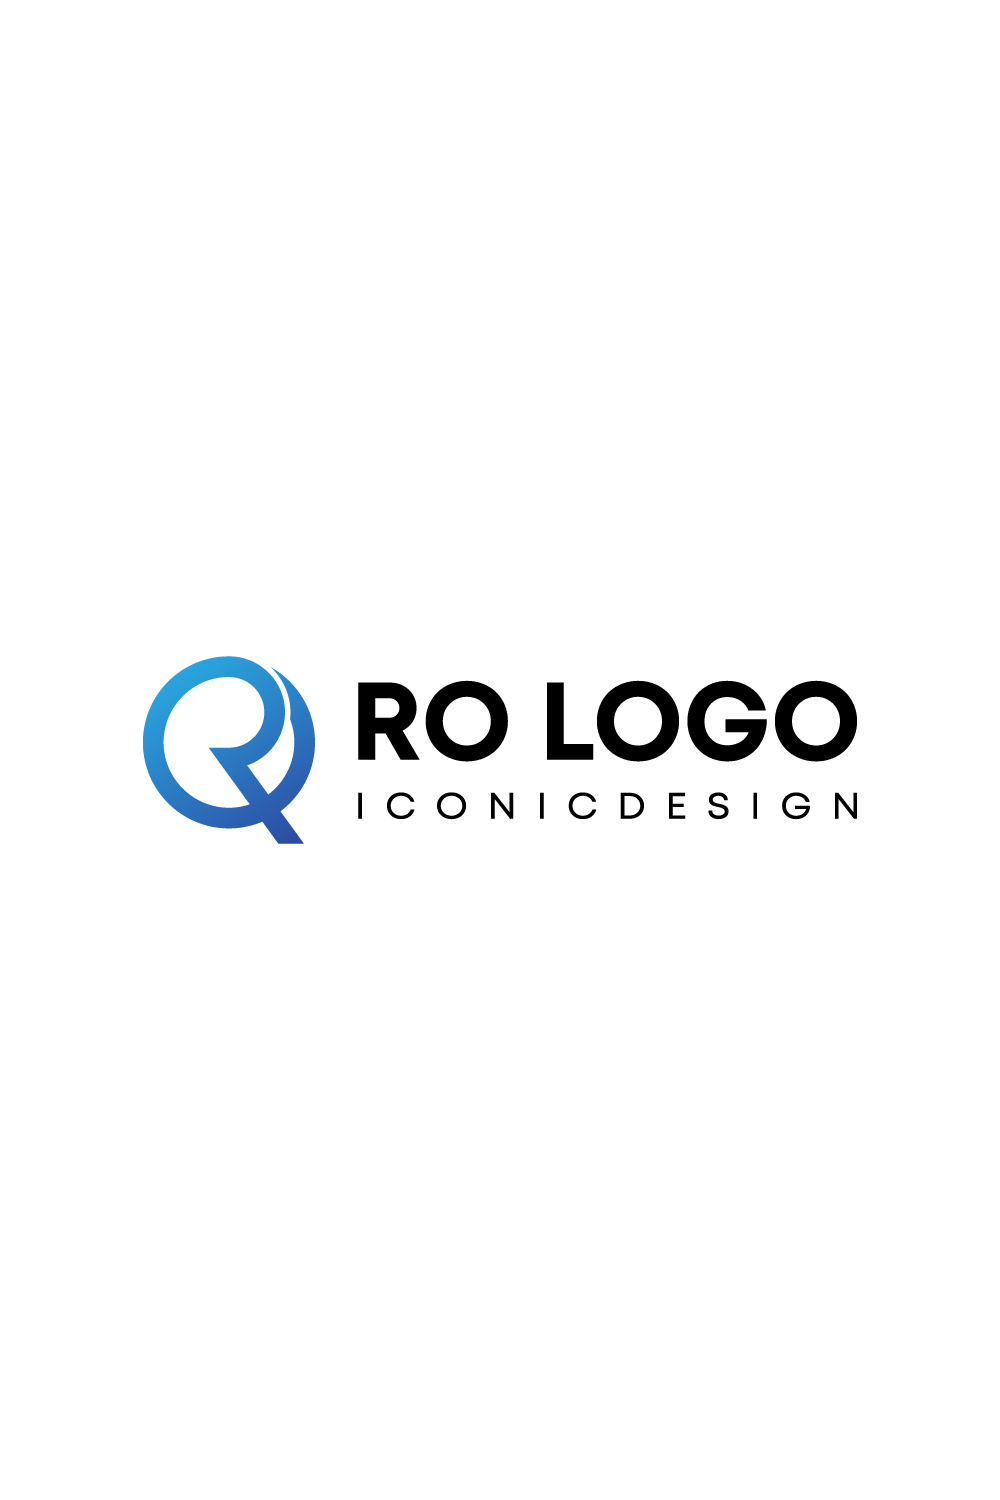 RO logo pinterest preview image.